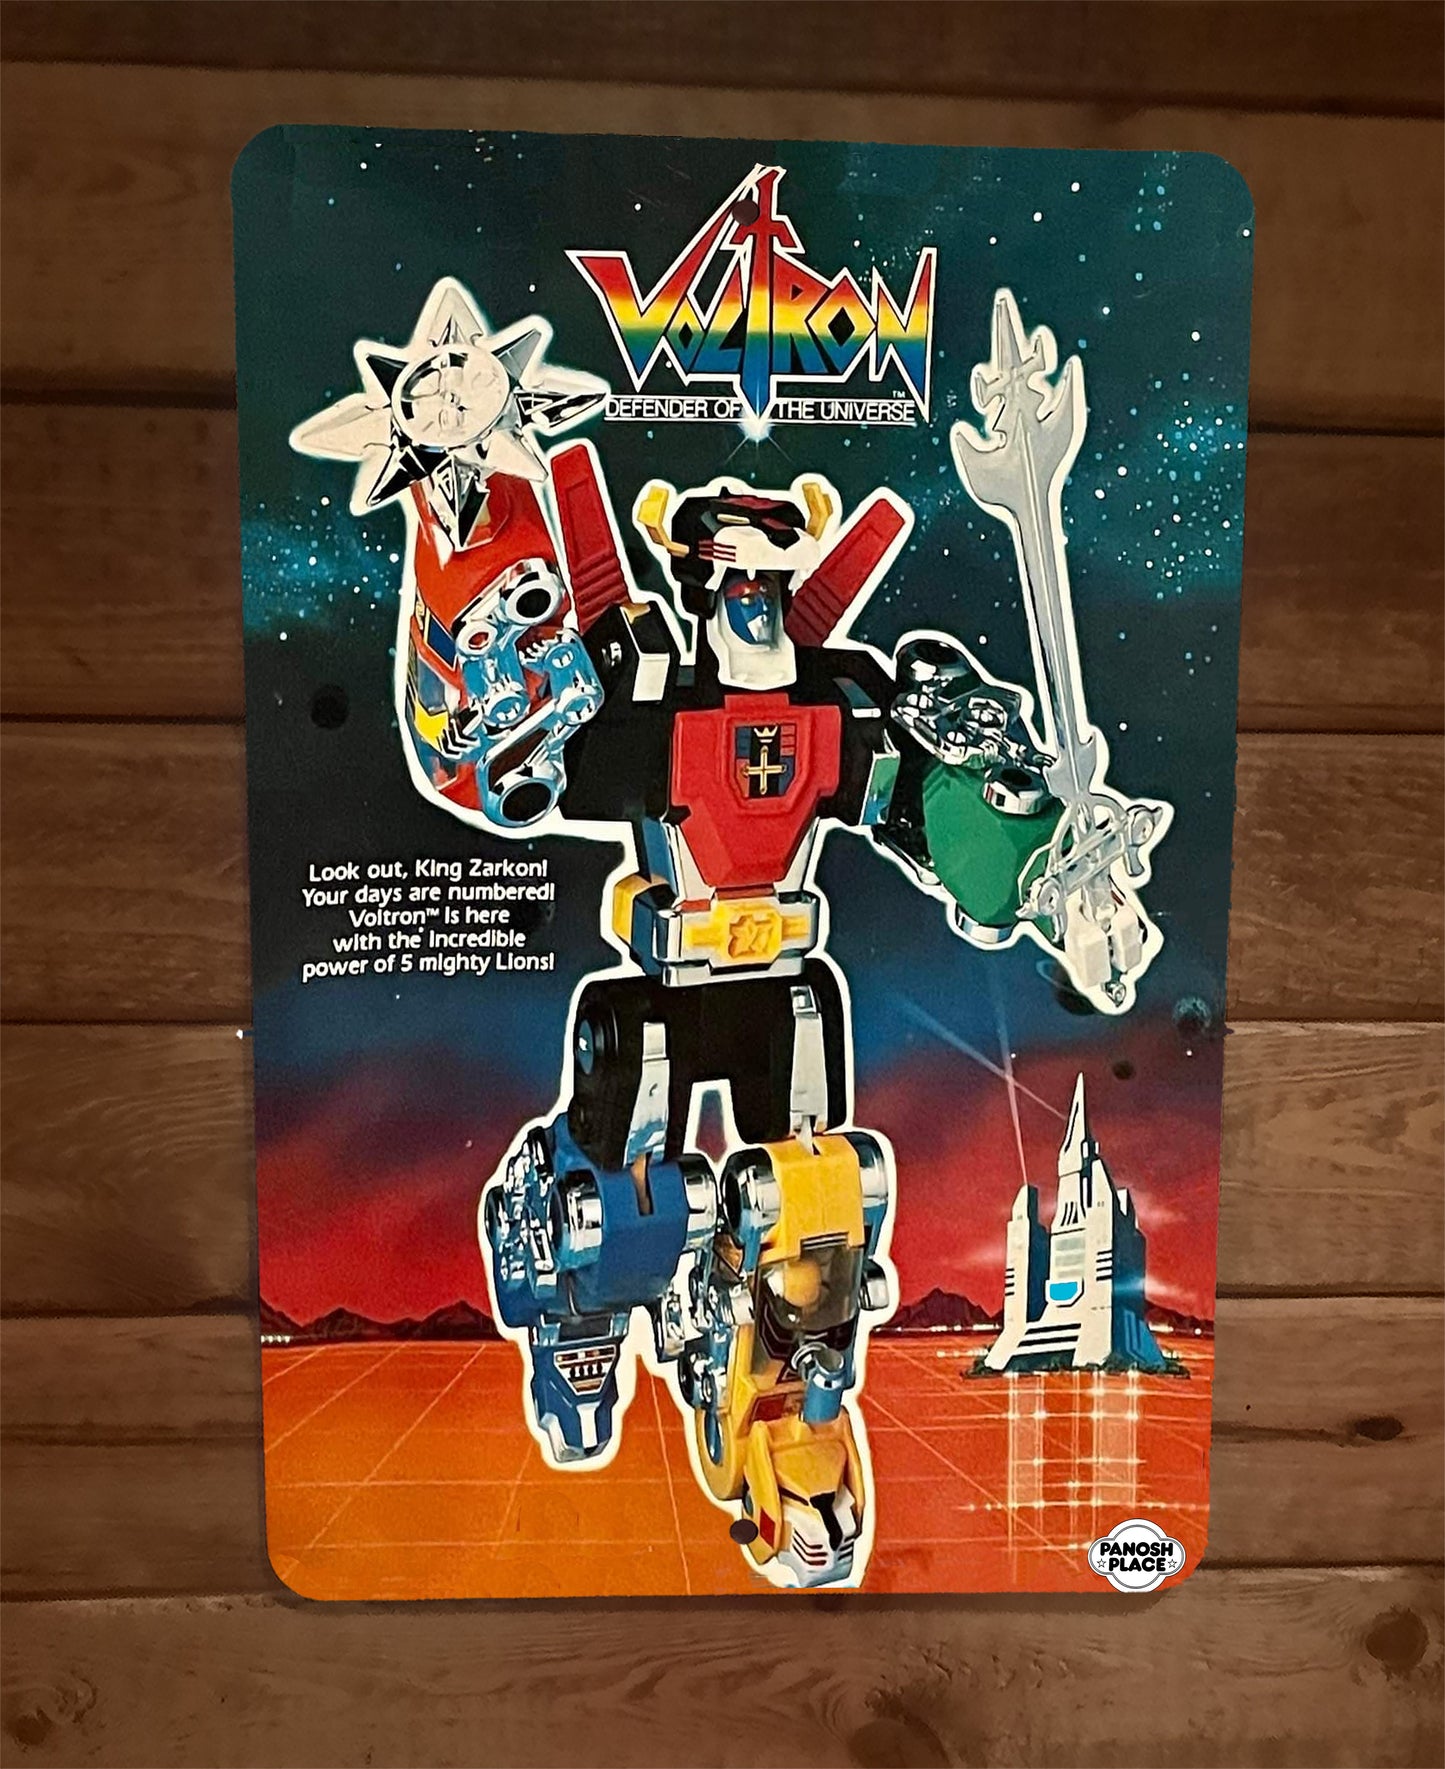 Panosh Place Voltron Box Cover Art 8x12 Metal Wall Sign Poster Retro 80s Cartoon TV Show